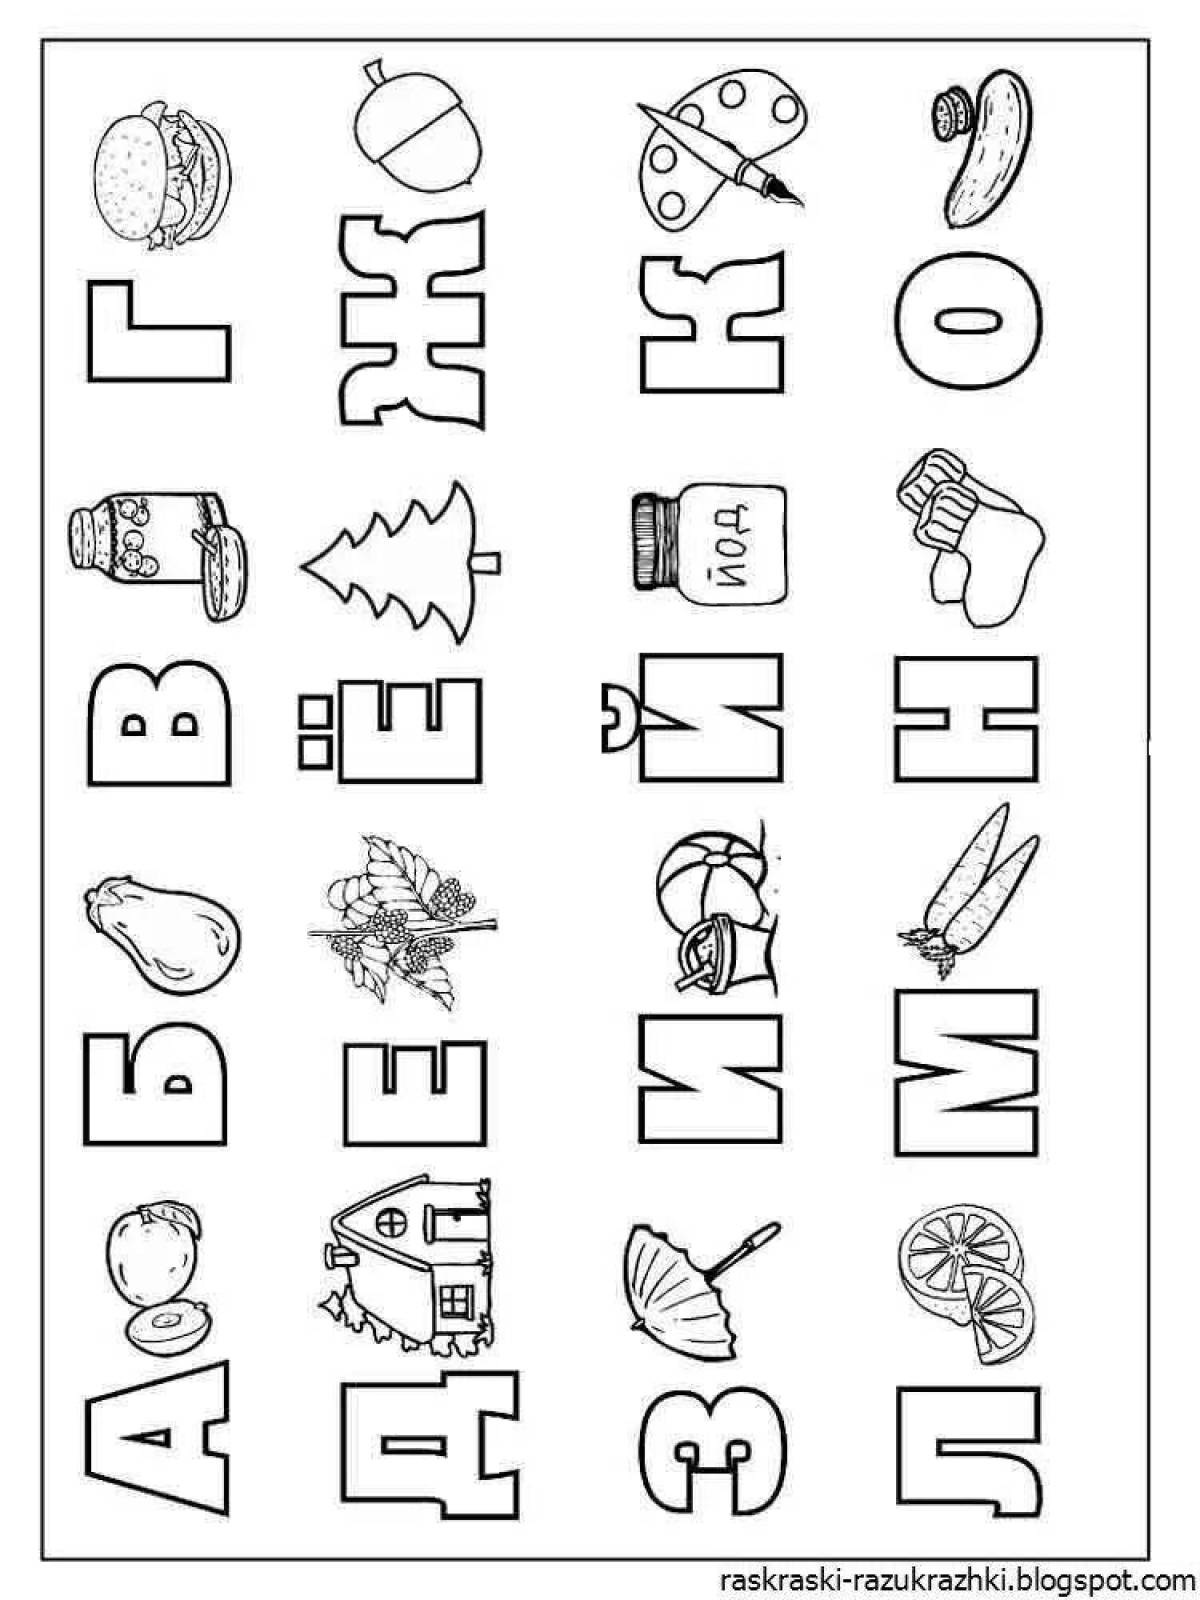 Alphabet for children 4 5 years old #8